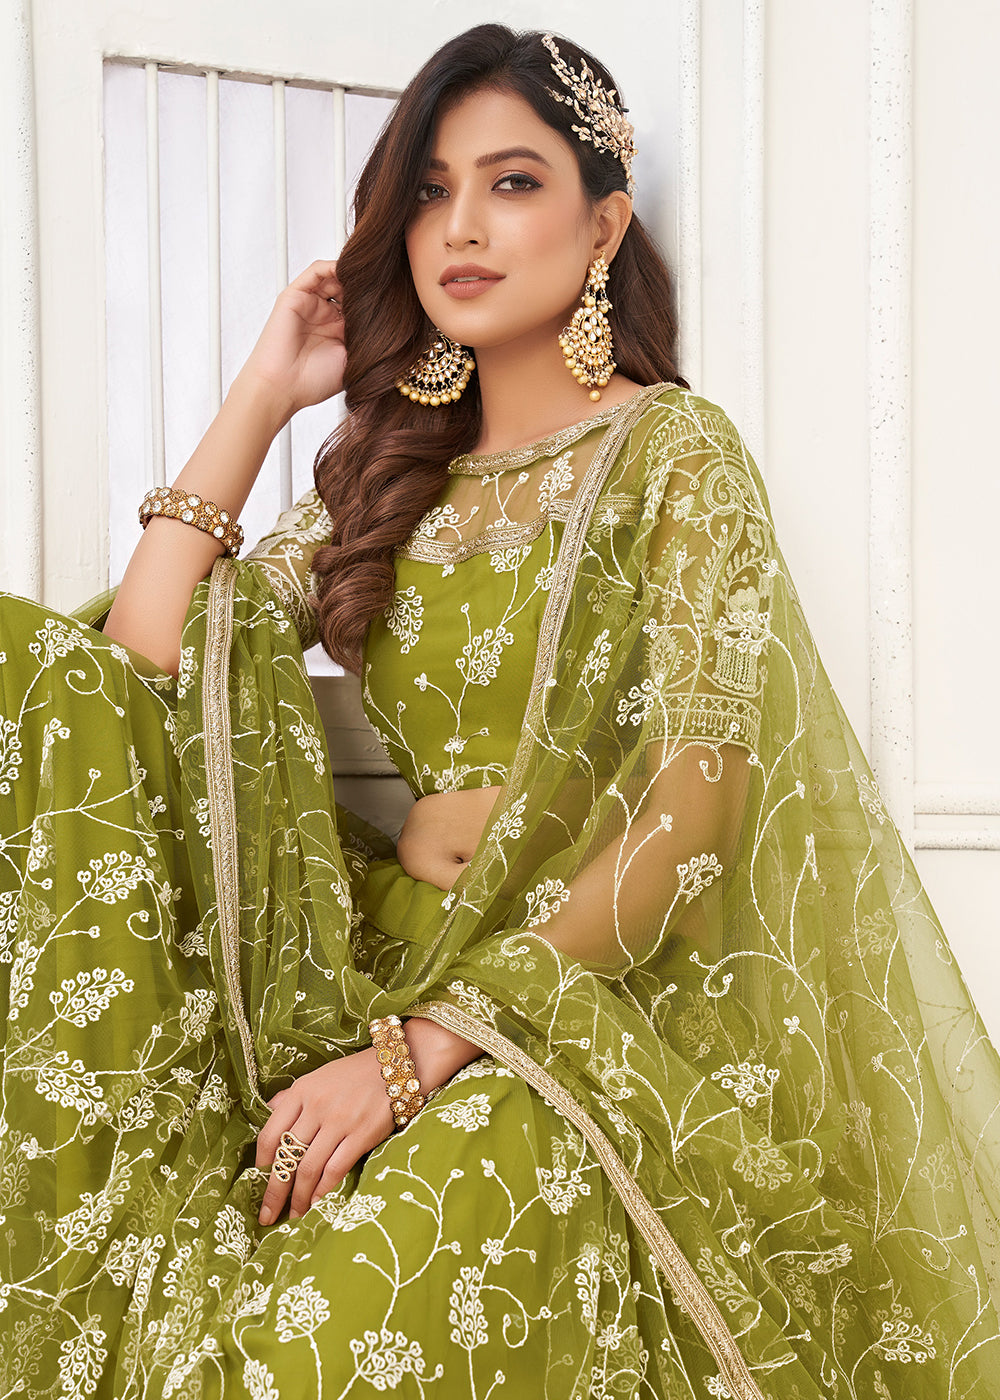 Buy Now Embroidered Net Green Mehndi & Haldi Wedding Lehenga Choli Online in USA, UK, Canada & Worldwide at Empress Clothing. 